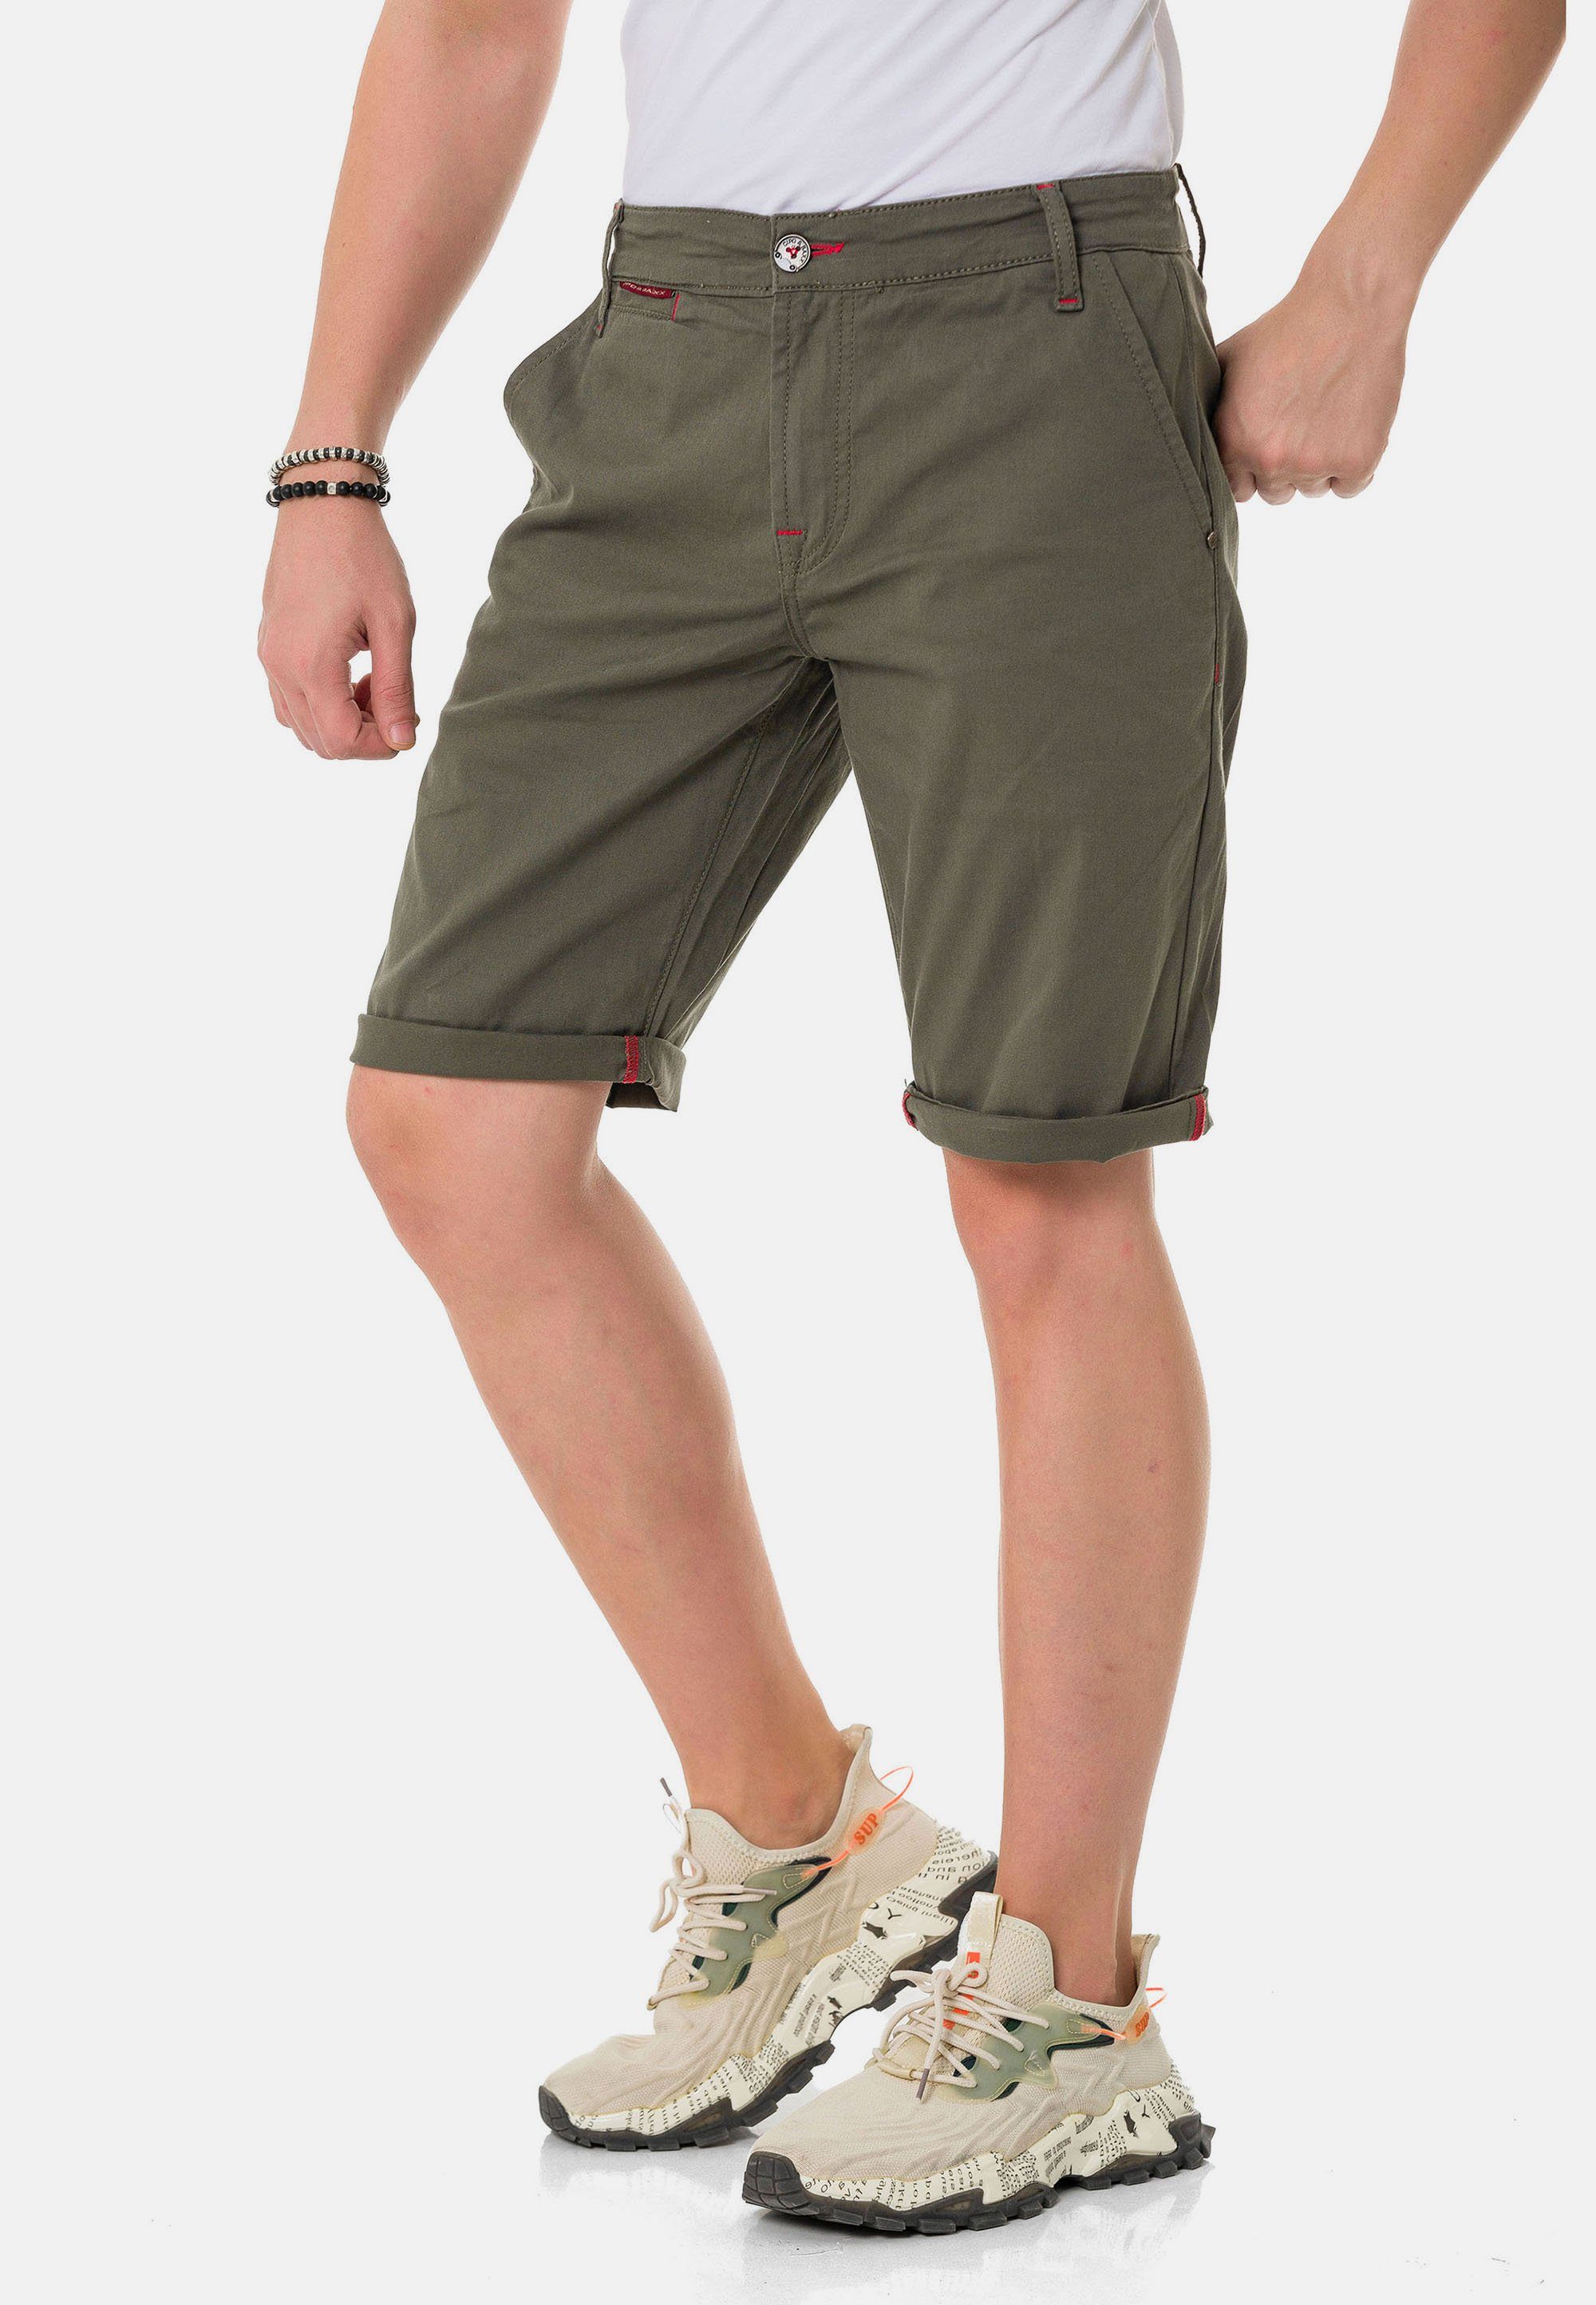 Cipo & Baxx Shorts im einfarbigen khaki Look